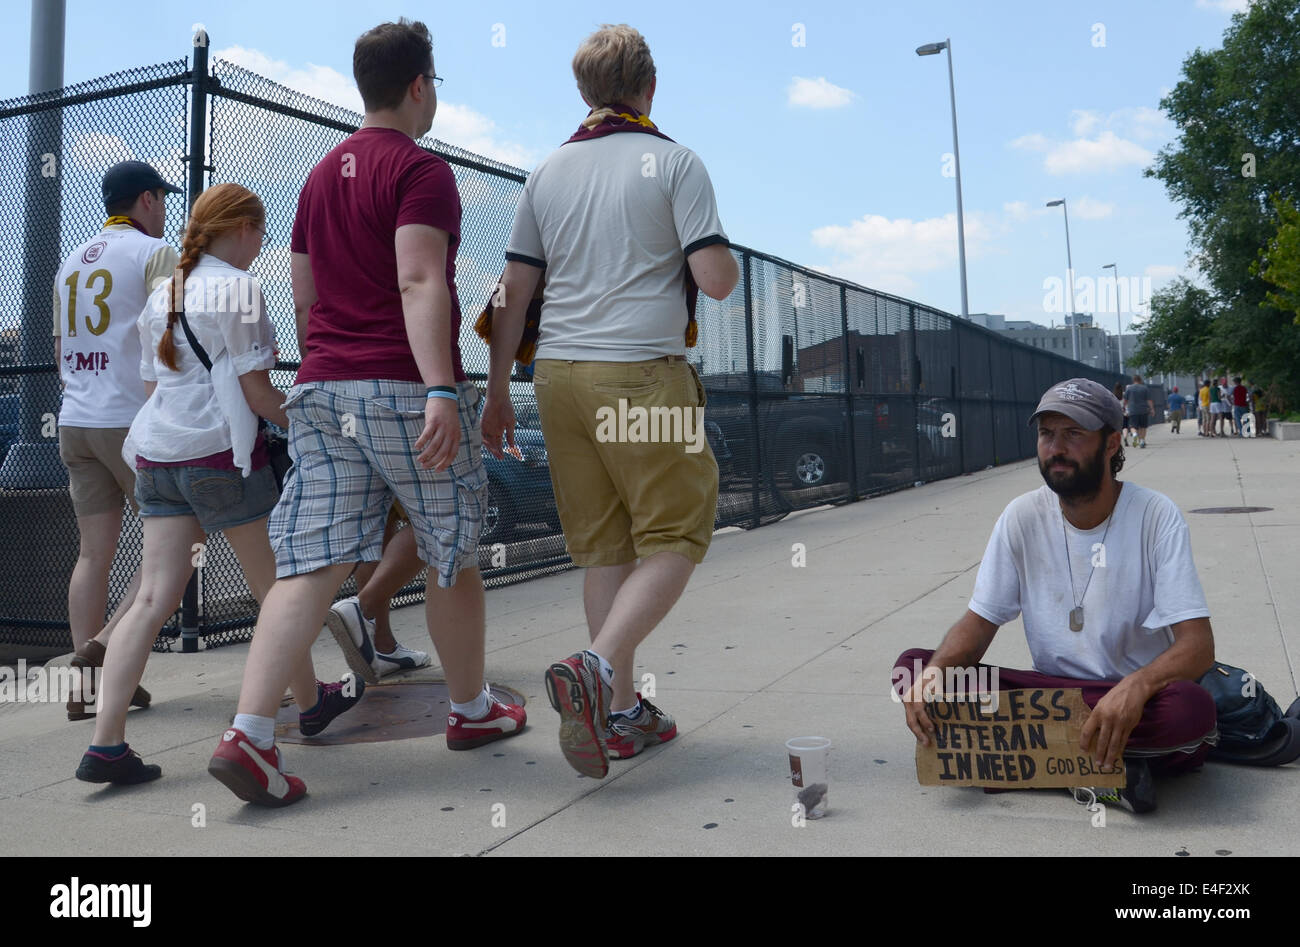 DETROIT, MI - JULY 6: People walking past homeless veteran begging for money in Detroit, MI on July 6, 2014 Stock Photo